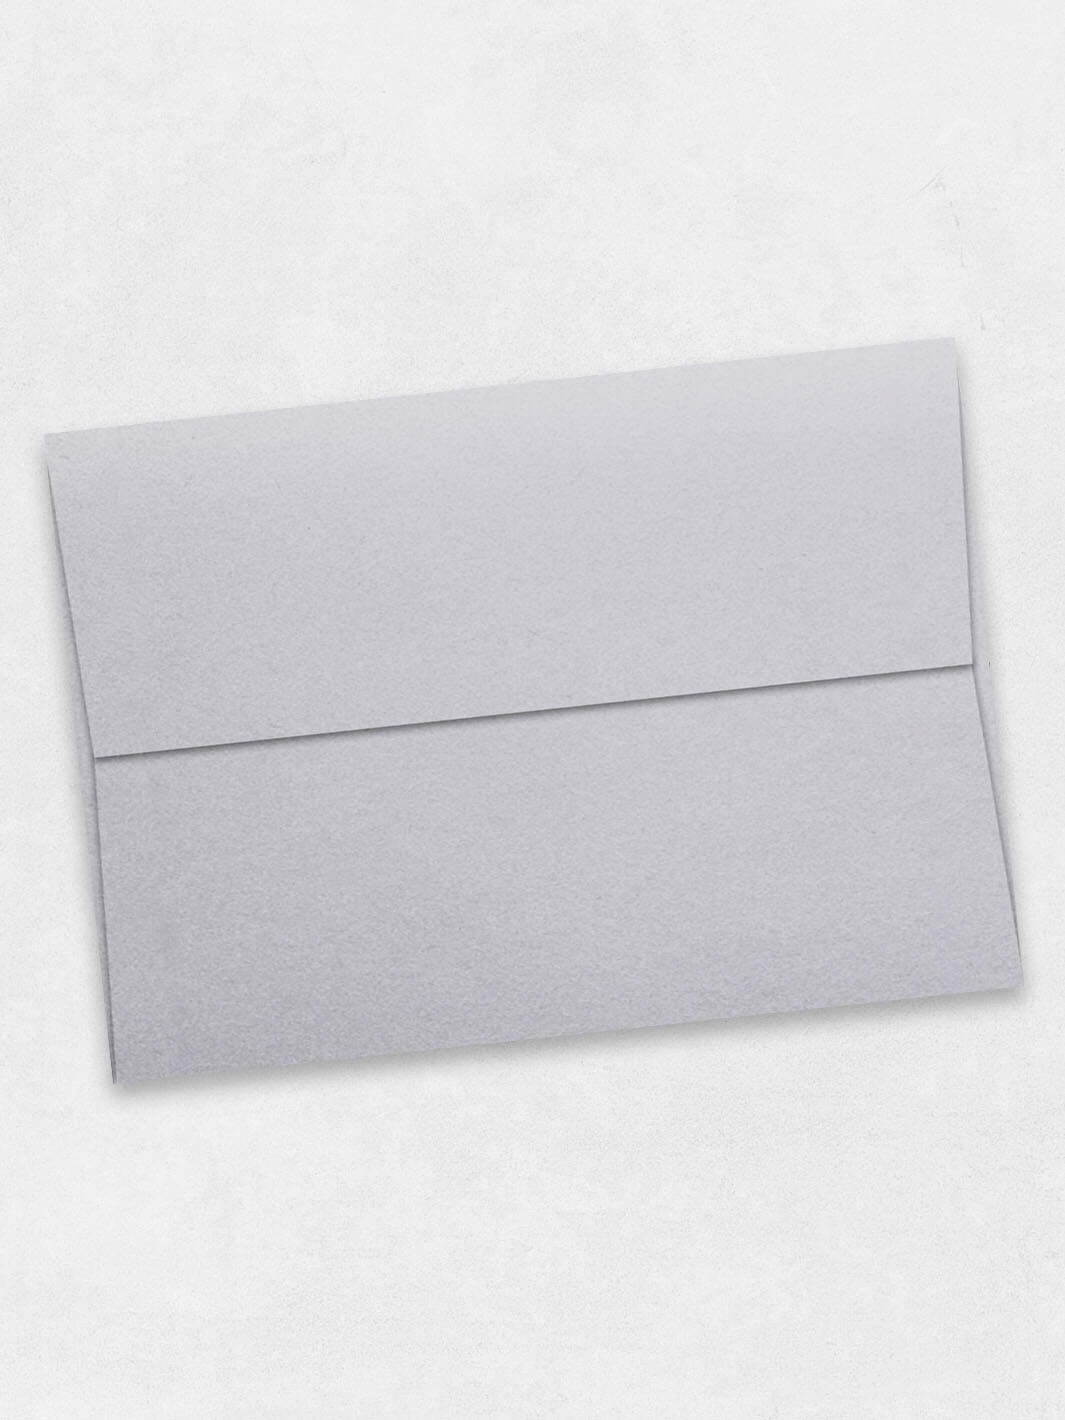 silver metallic colored a7 envelope